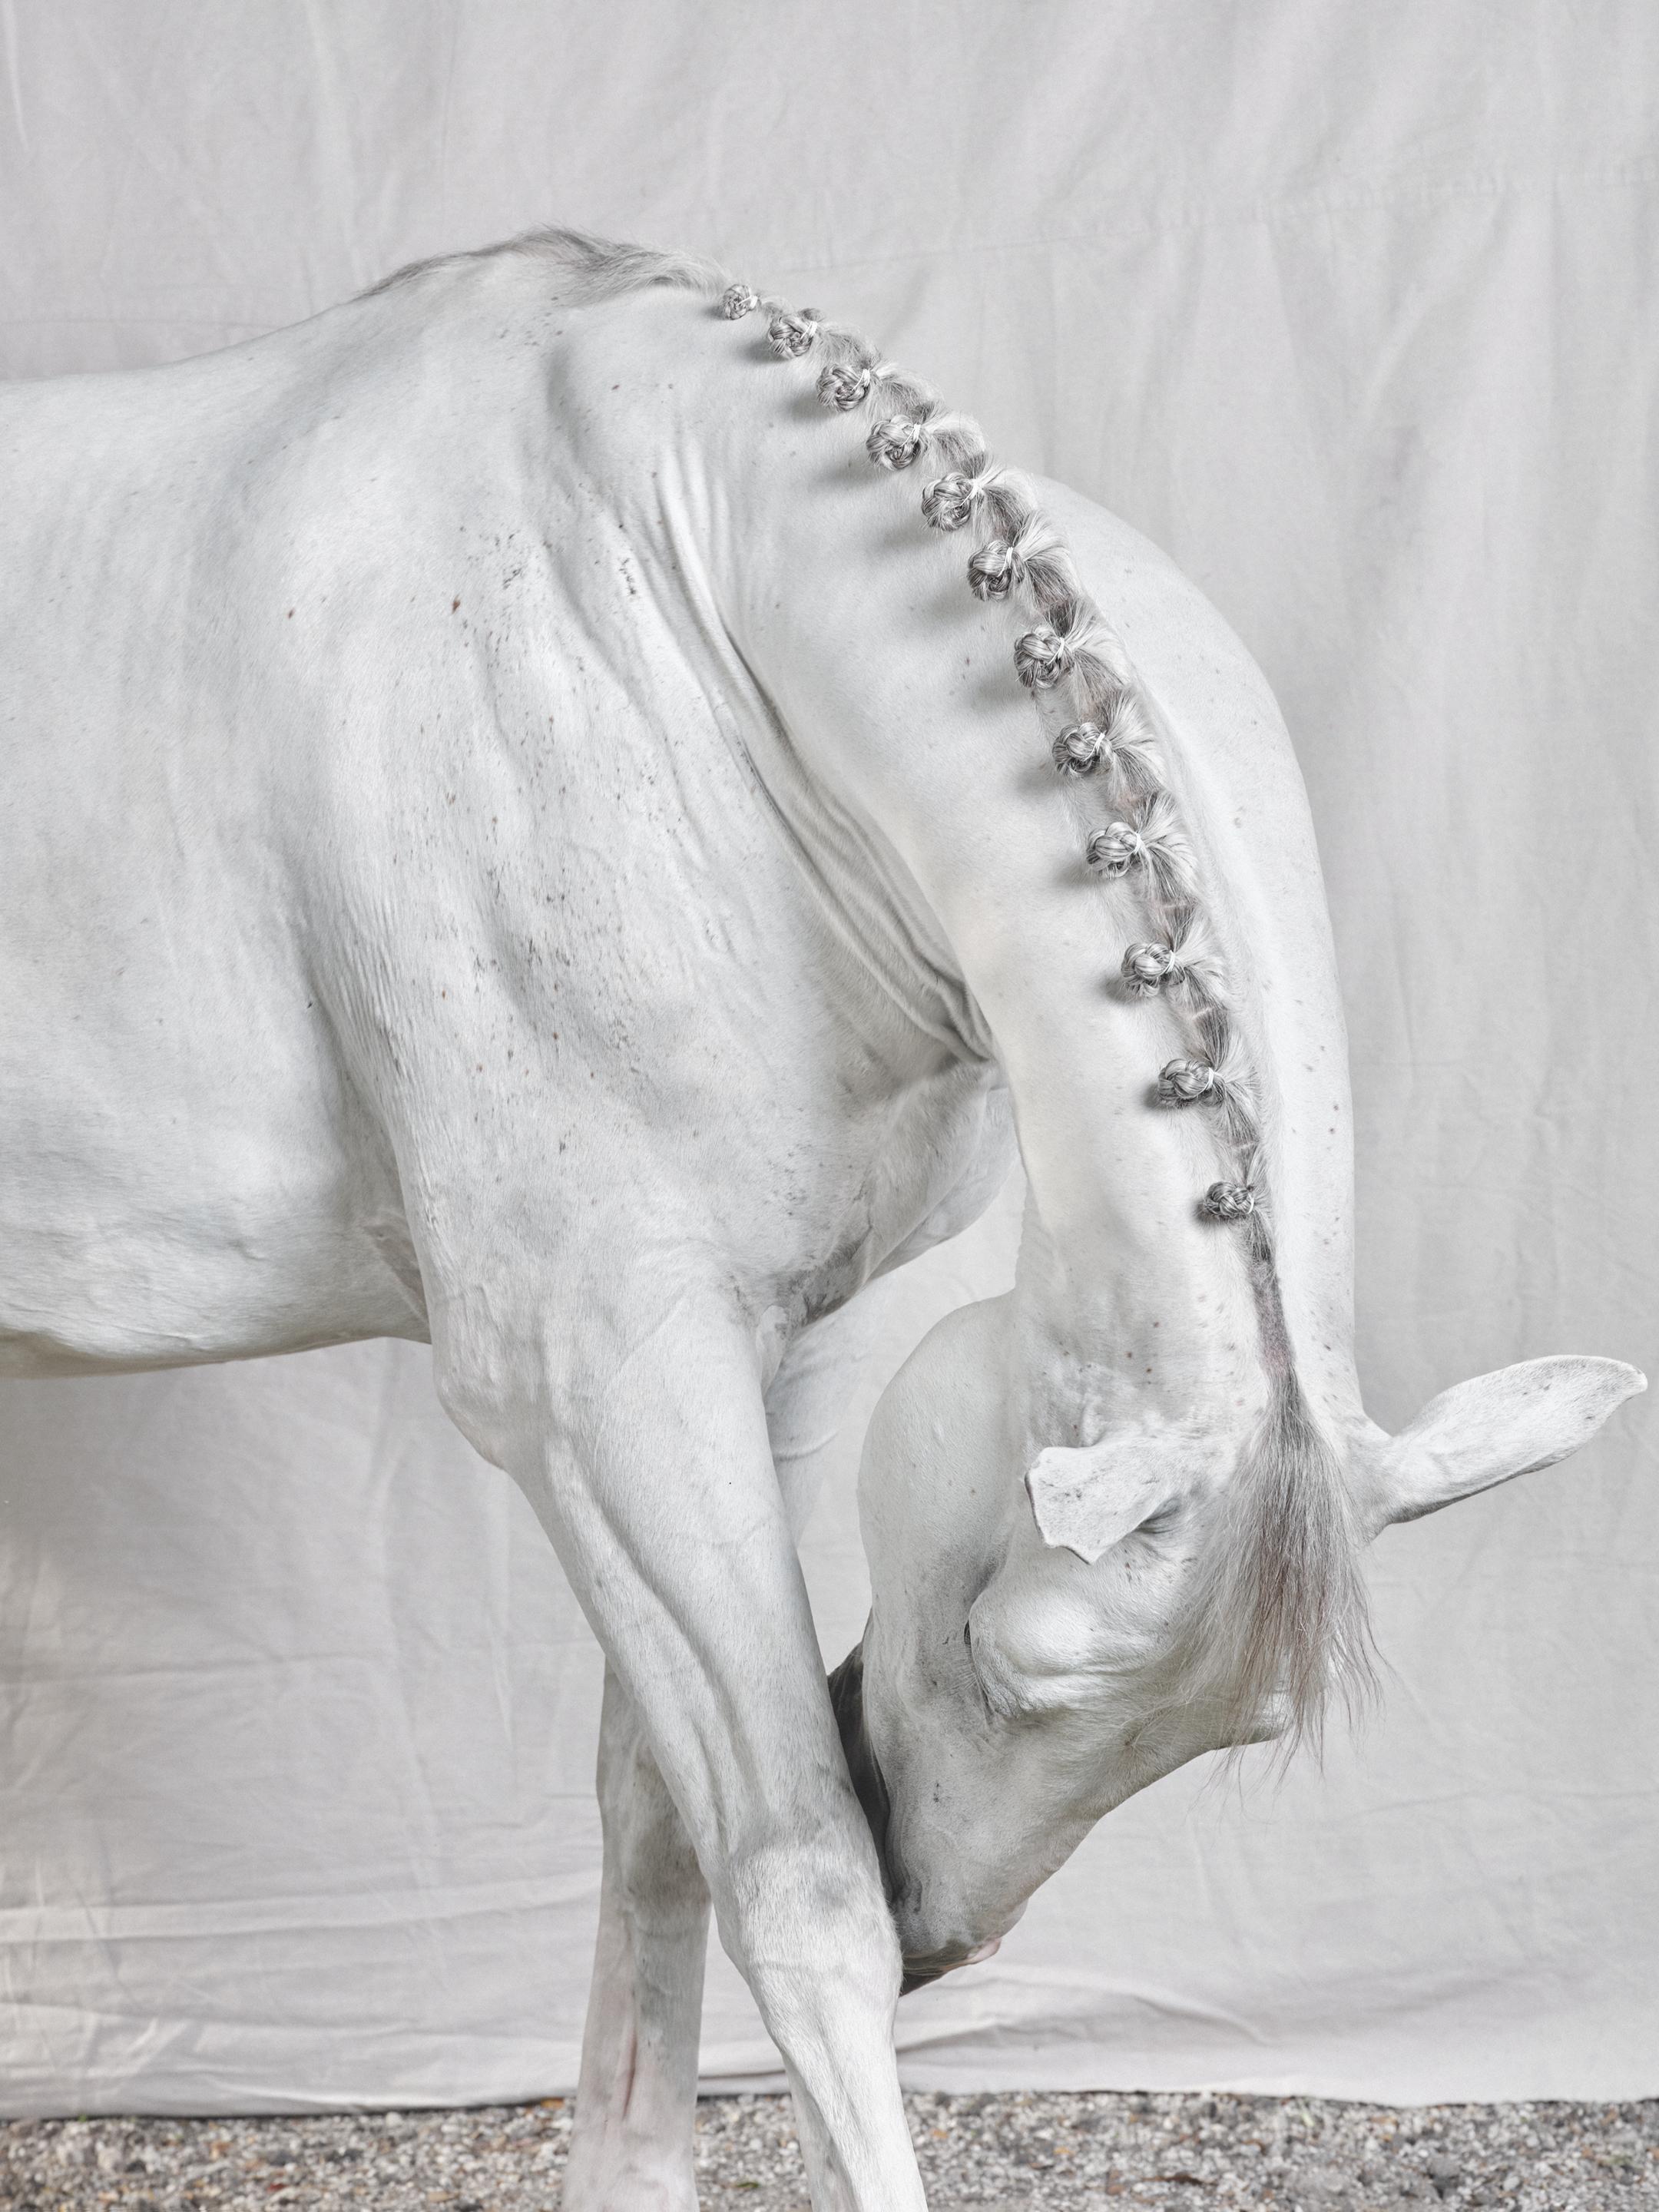 Casper on White - B&W Limited Edition Horse Portrait 2019 - Photograph by Juan Lamarca